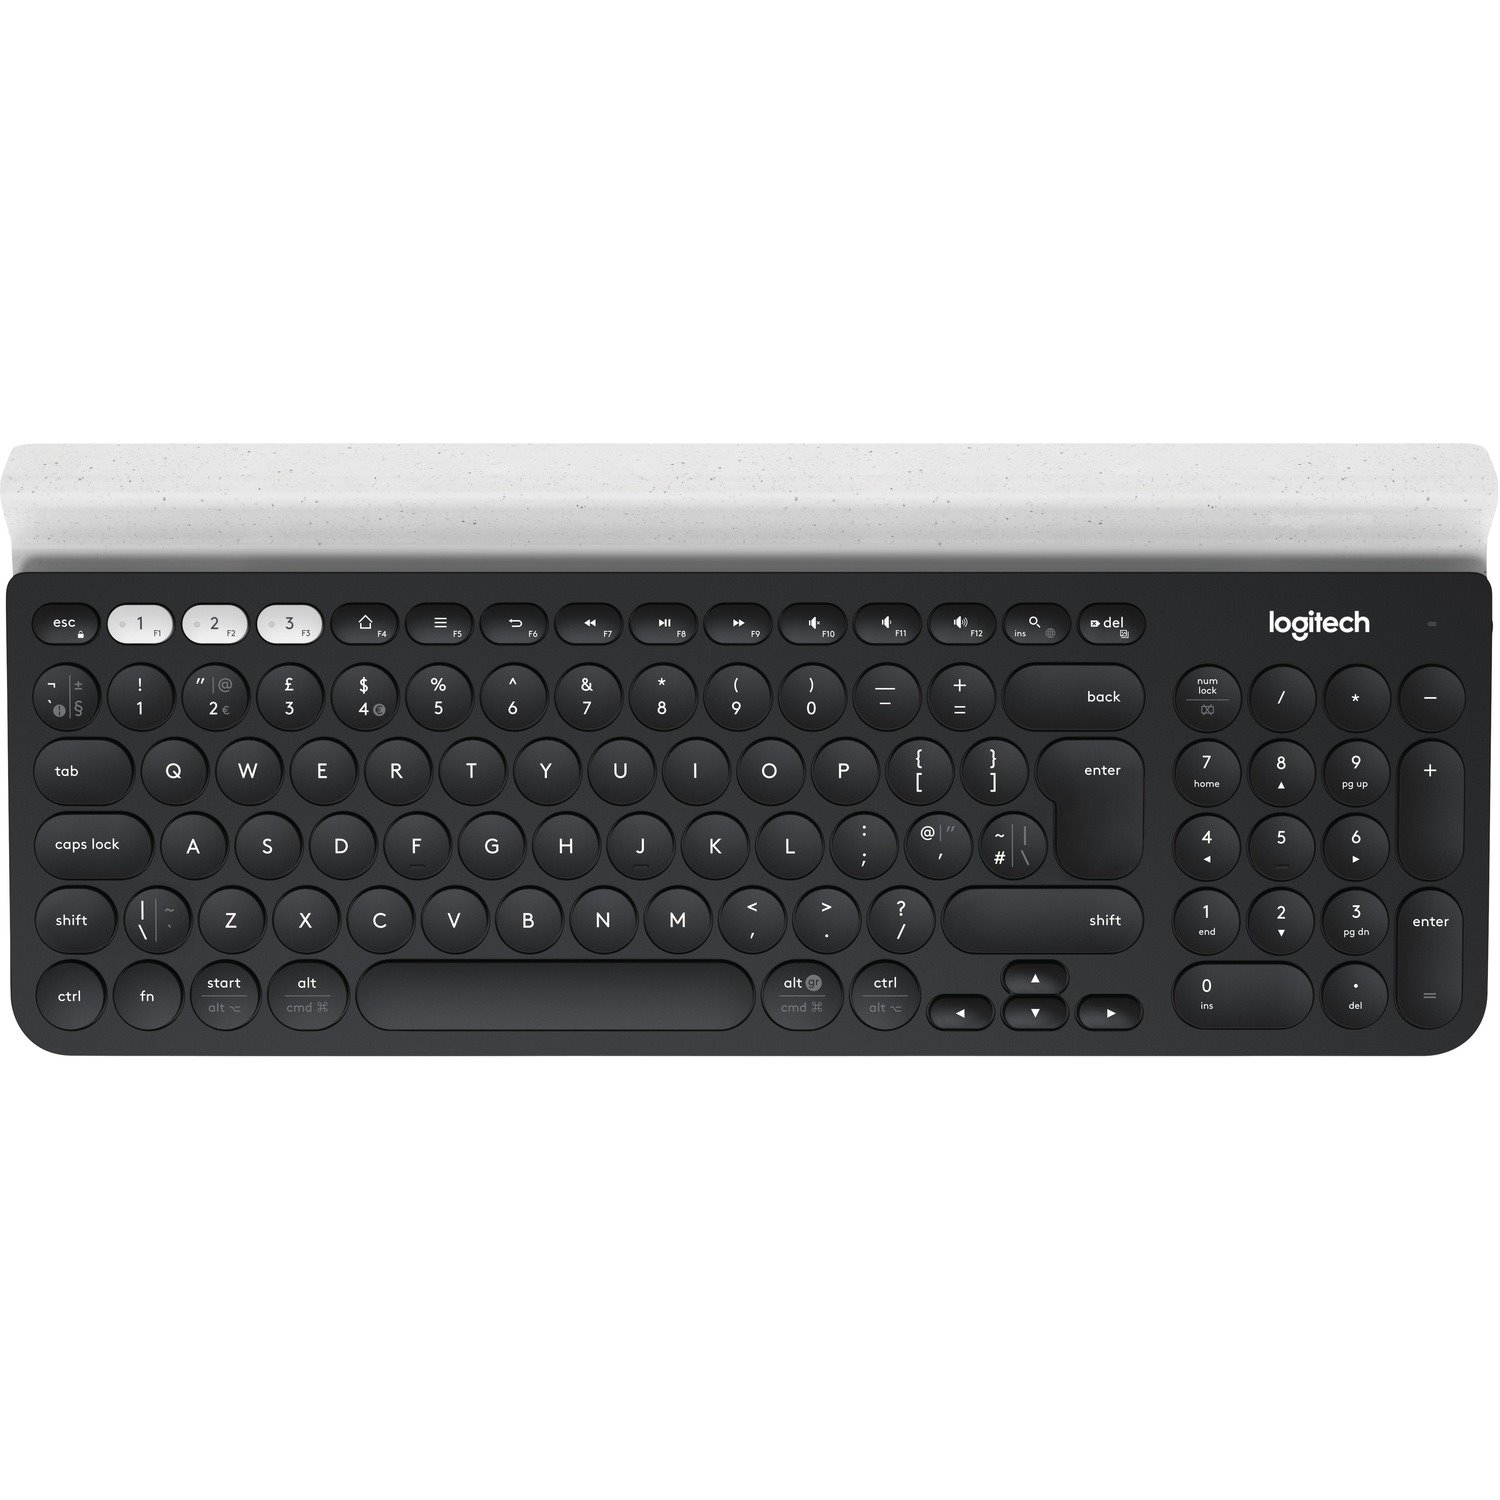 Logitech K780 Keyboard - Wireless Connectivity - USB Interface - Black, Grey